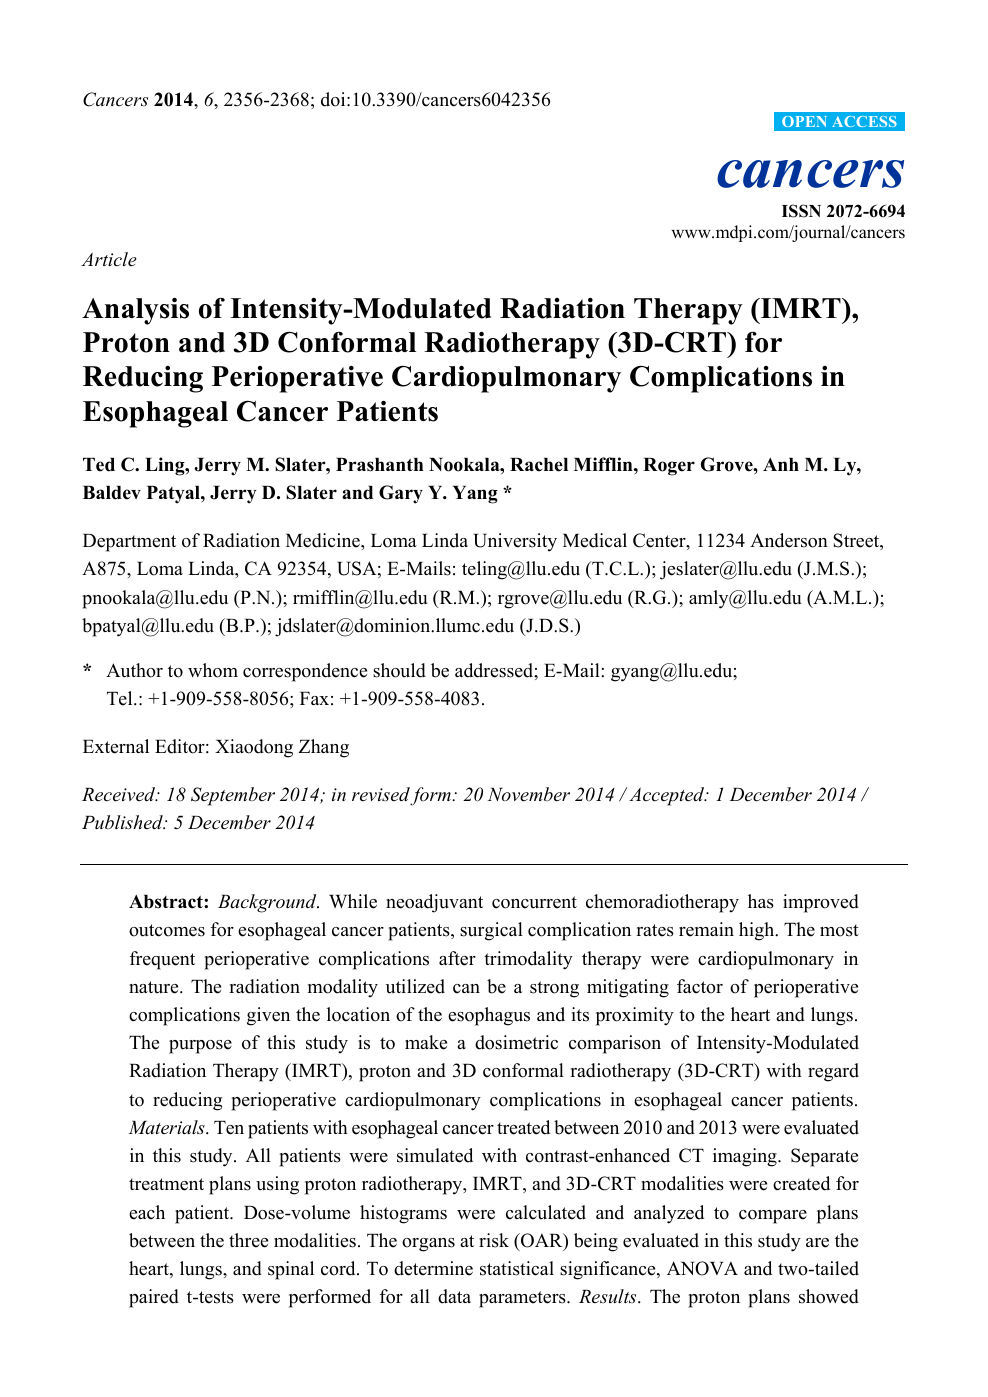 Analysis of Intensity-Modulated Radiation Therapy (IMRT), Proton 